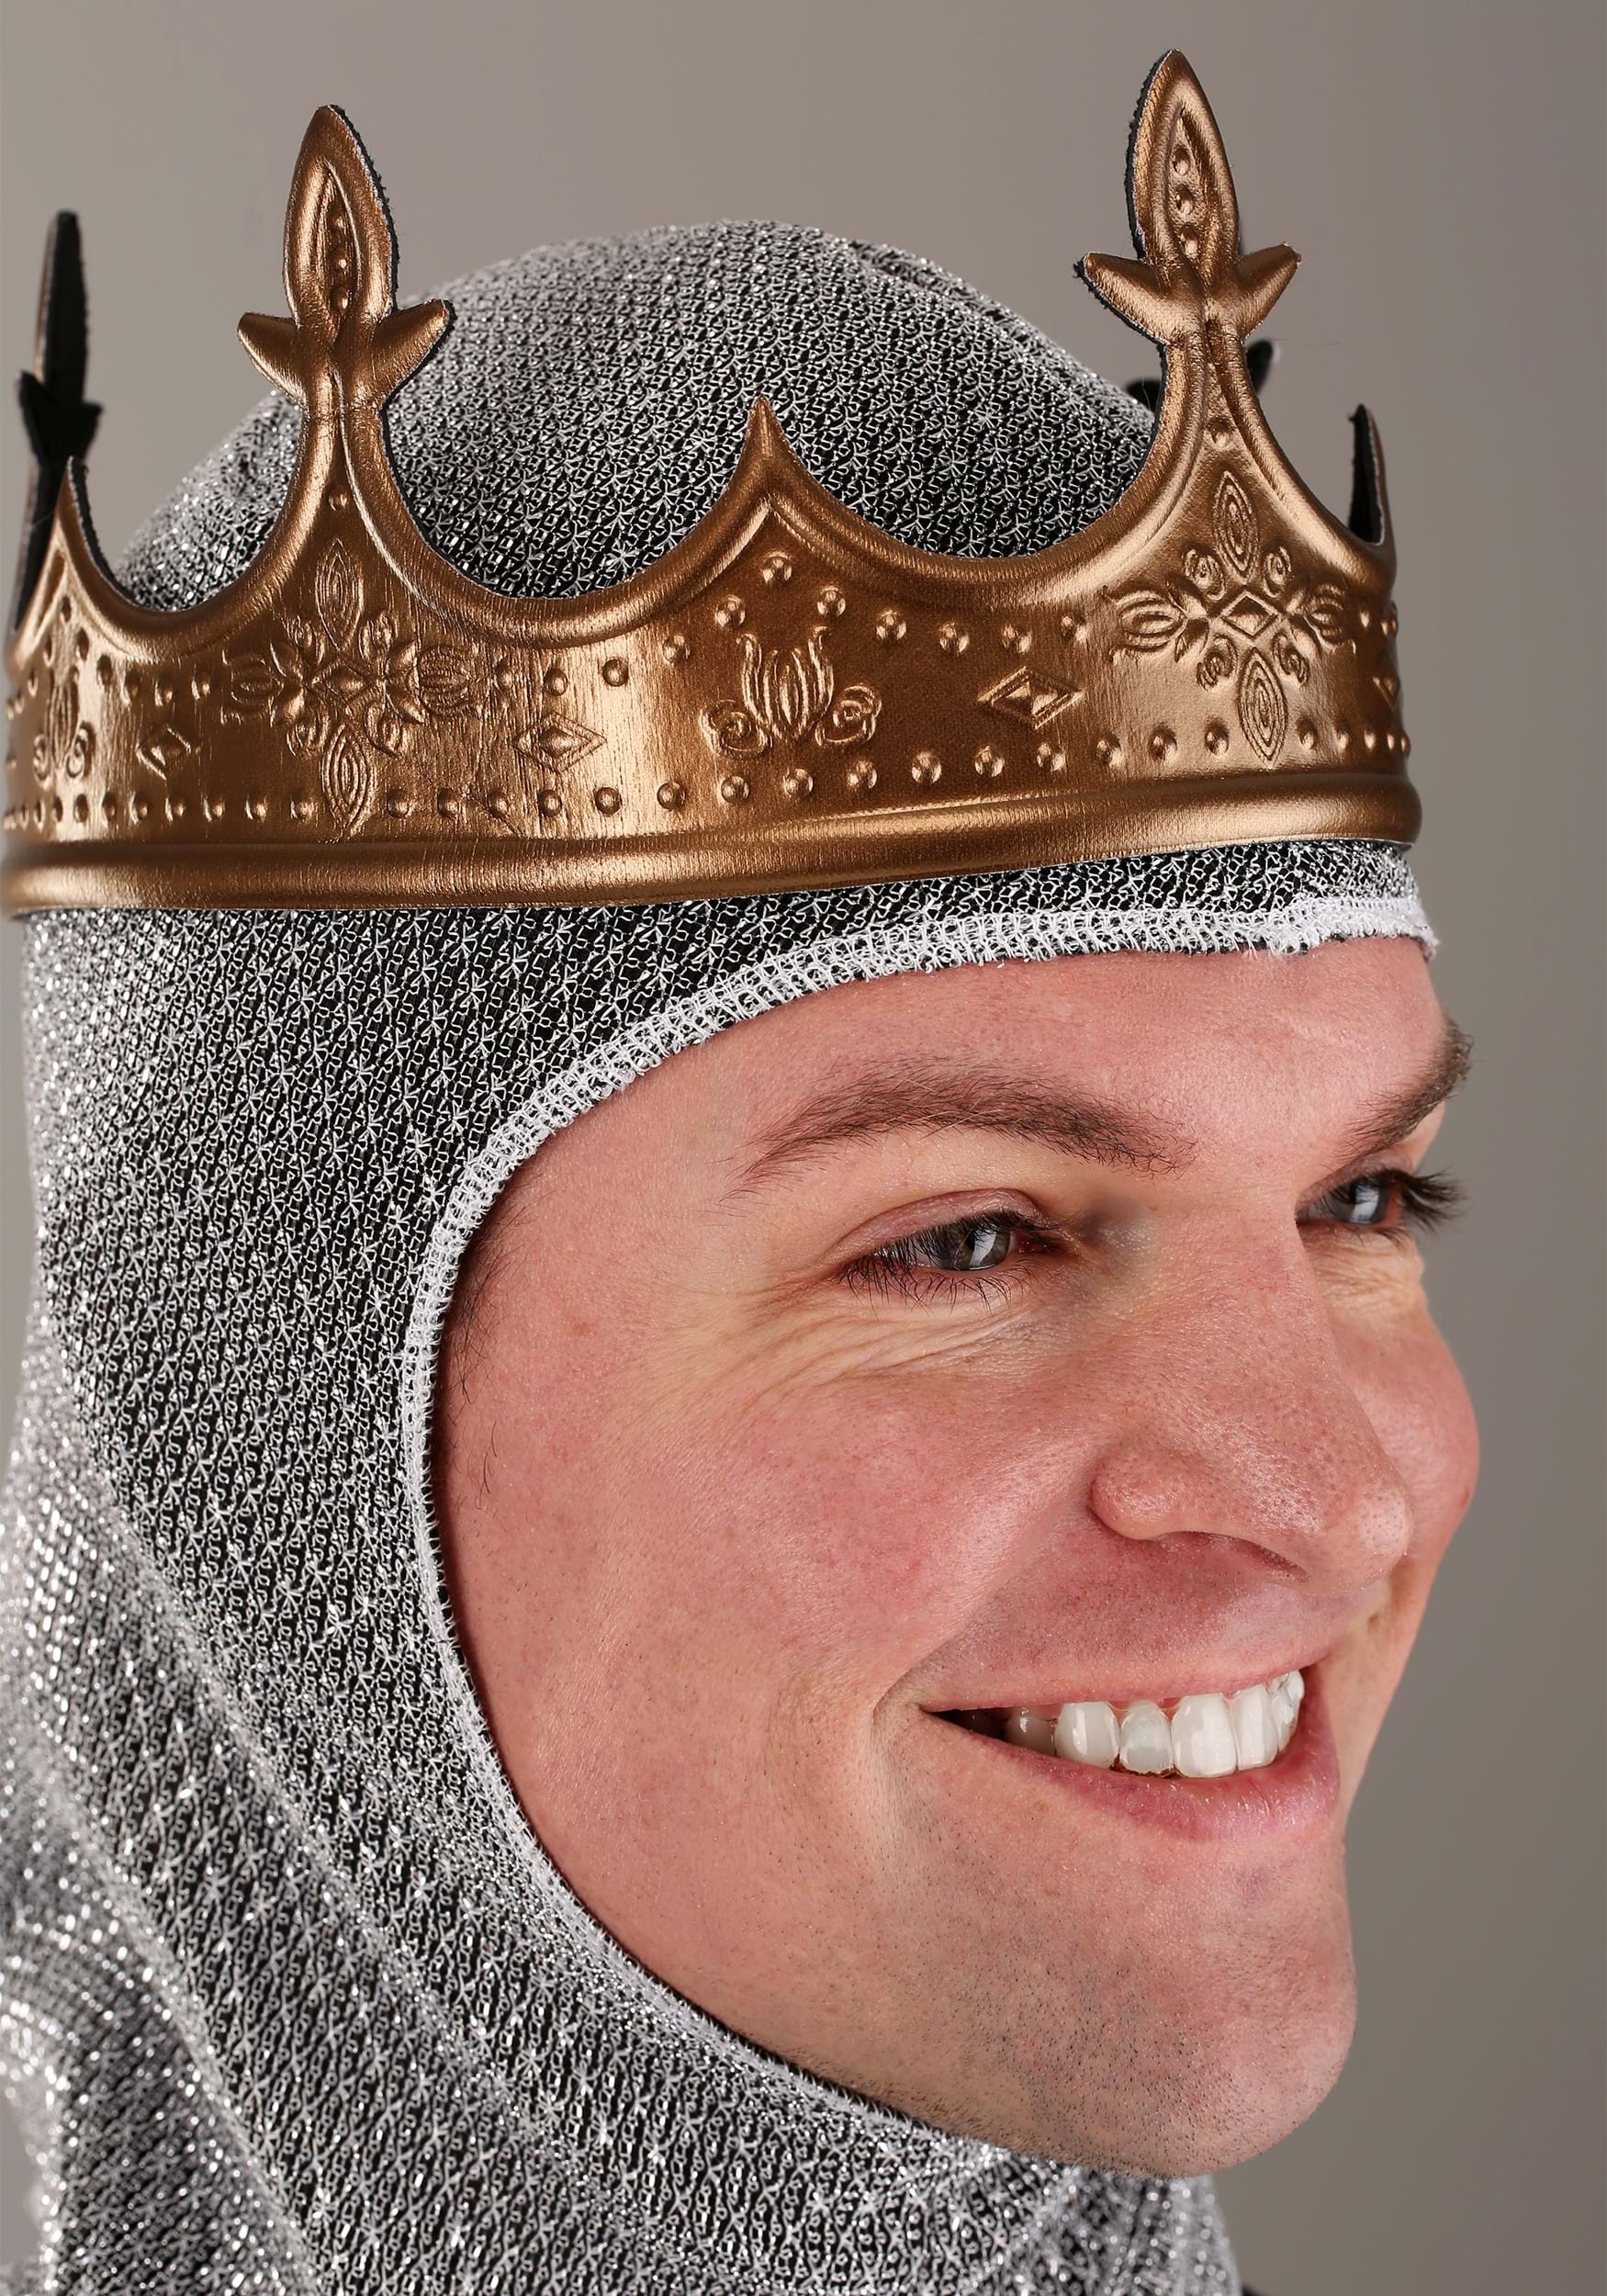 King Arthur Hood With Crown